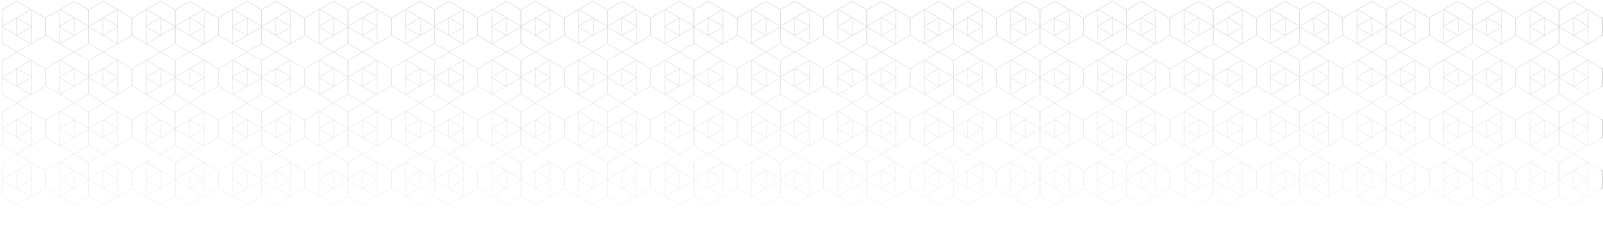 pattern_hexagon copy.png